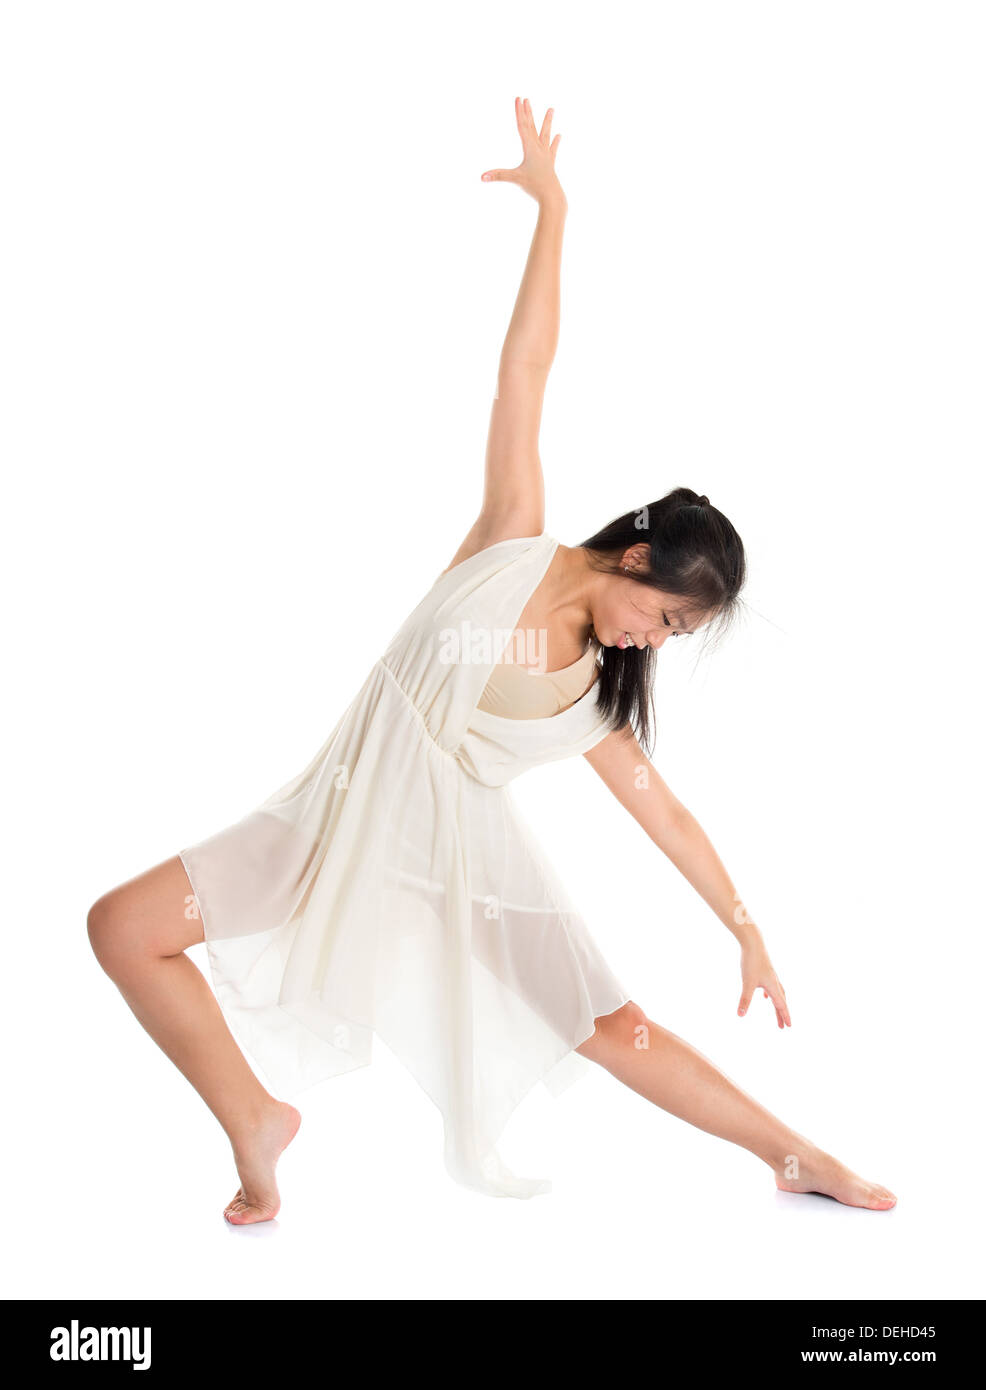 Buy Ballet Arabesque Positions colour Uniform Simple Ballet Steps Online in  India - Etsy